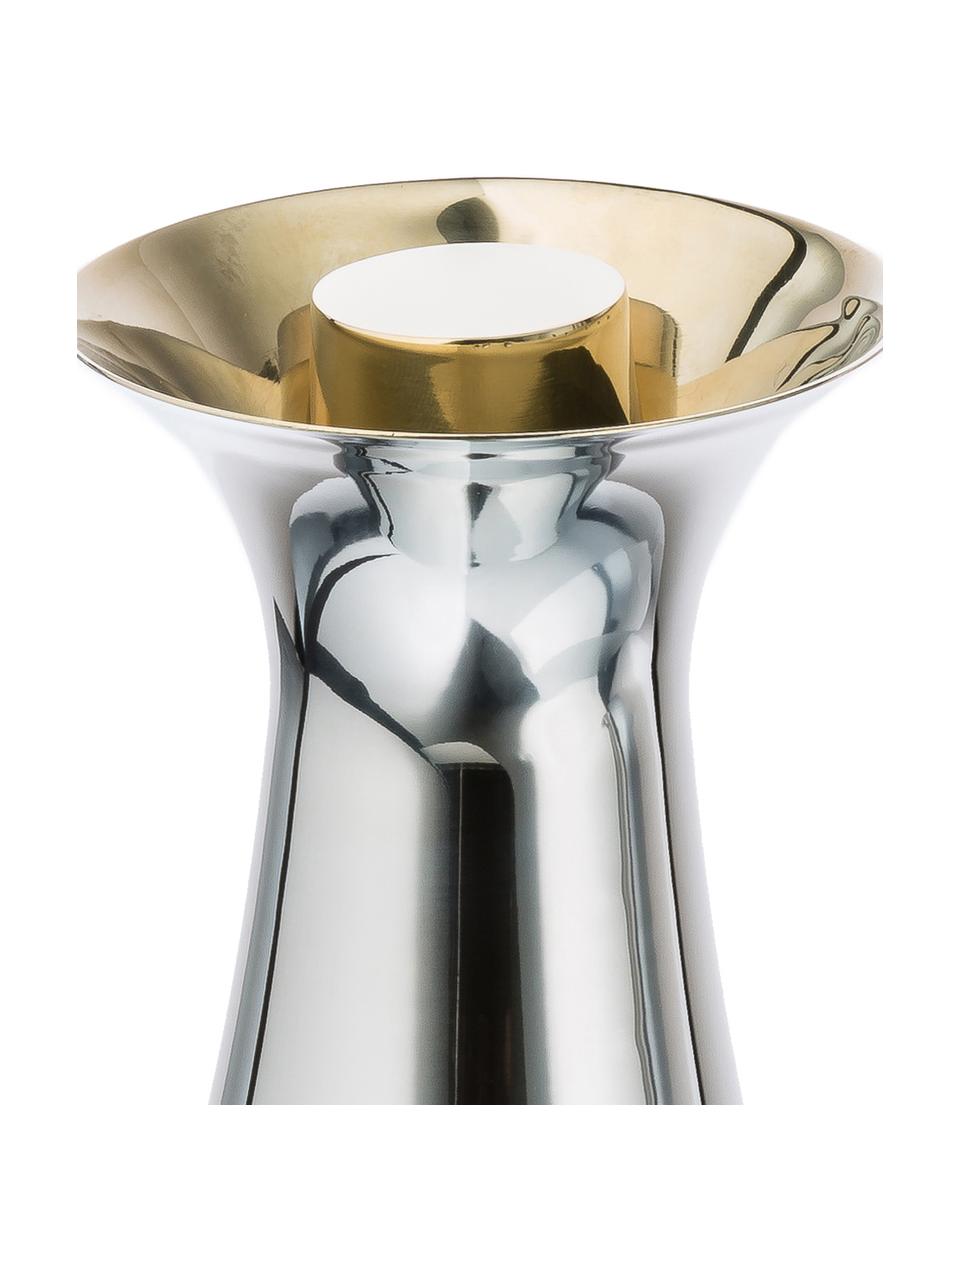 Design Karaffe Foster in Silber/Gold, 1 L, Innen: Edelstahl mit goldfarbene, Edelstahl, Goldfarben, 1 L